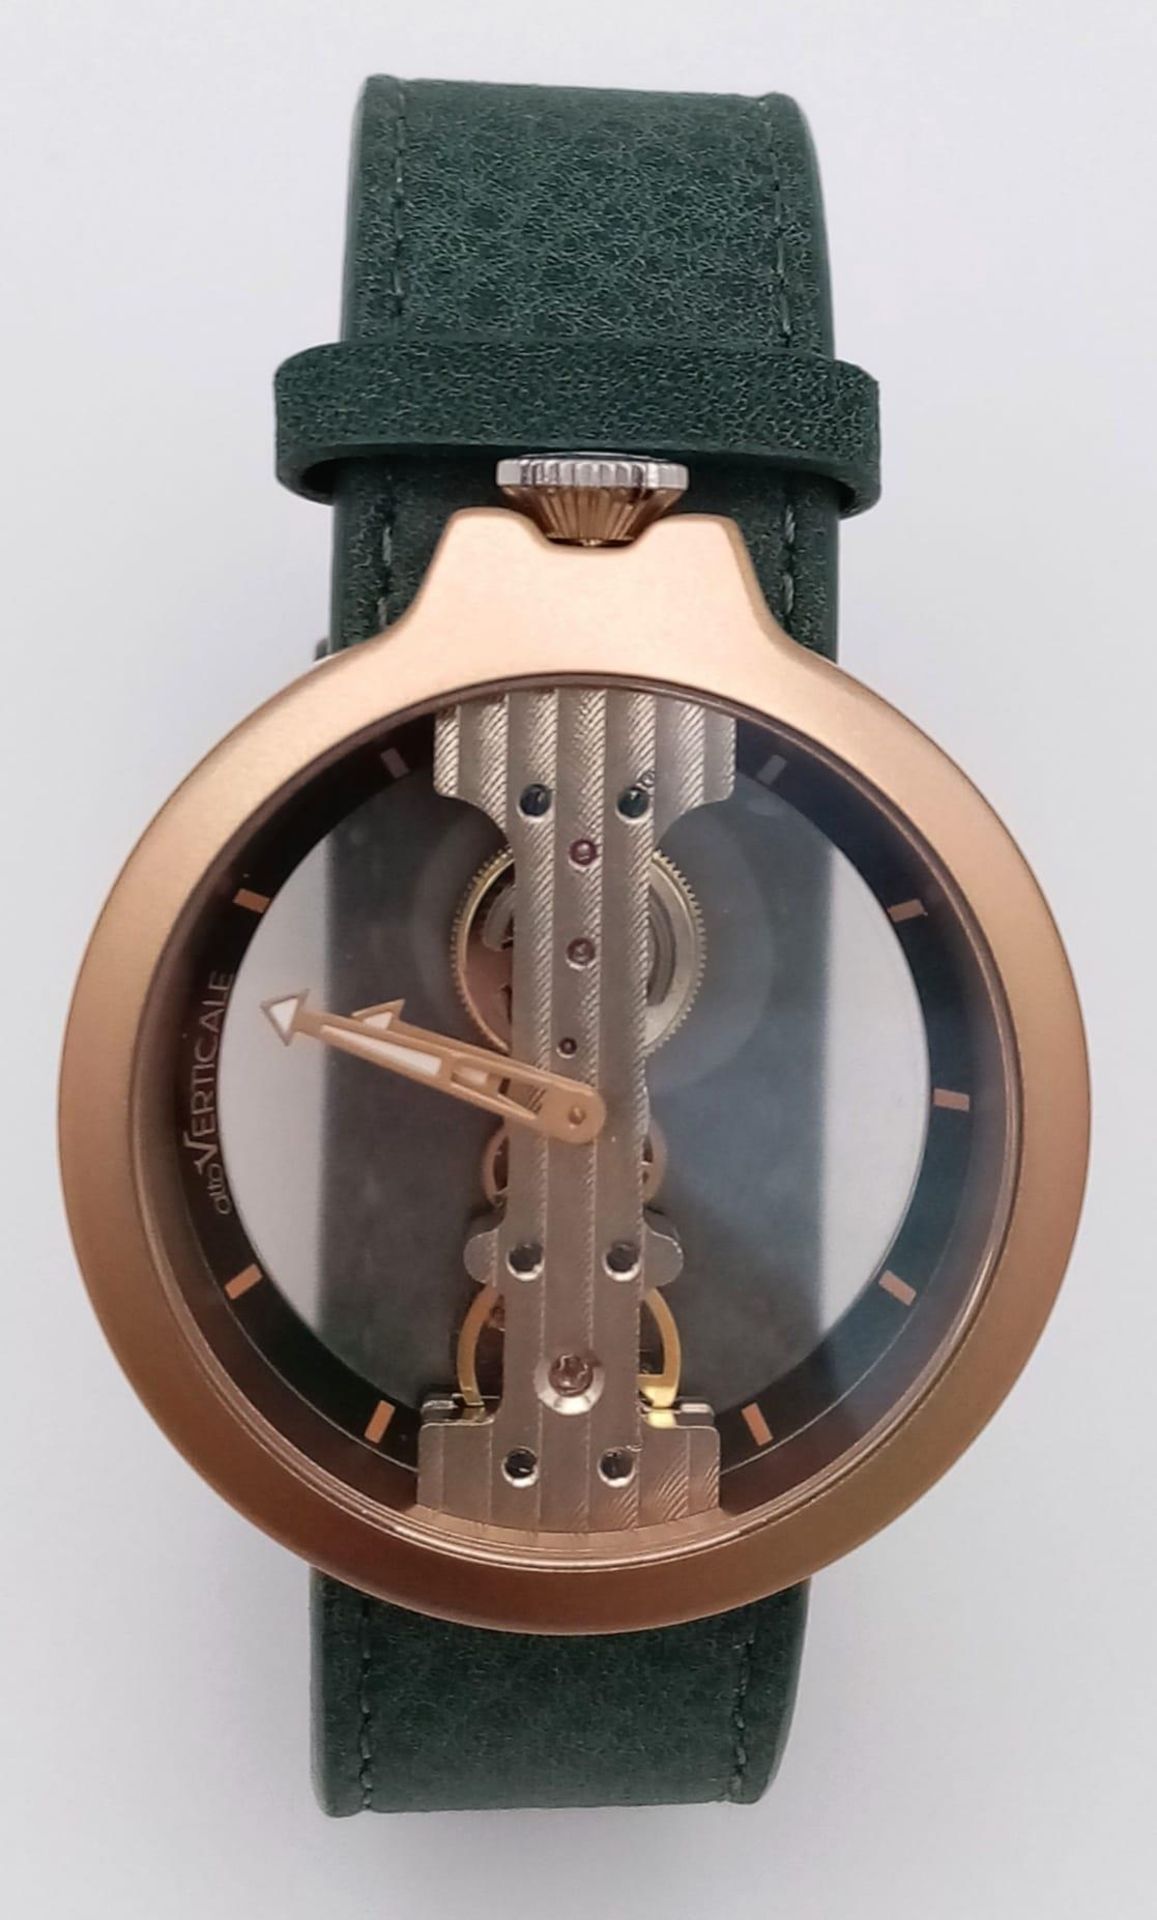 A Verticale Mechanical Top Winder Gents Watch. Green leather strap. Gold tone ceramic gilded - Bild 2 aus 7